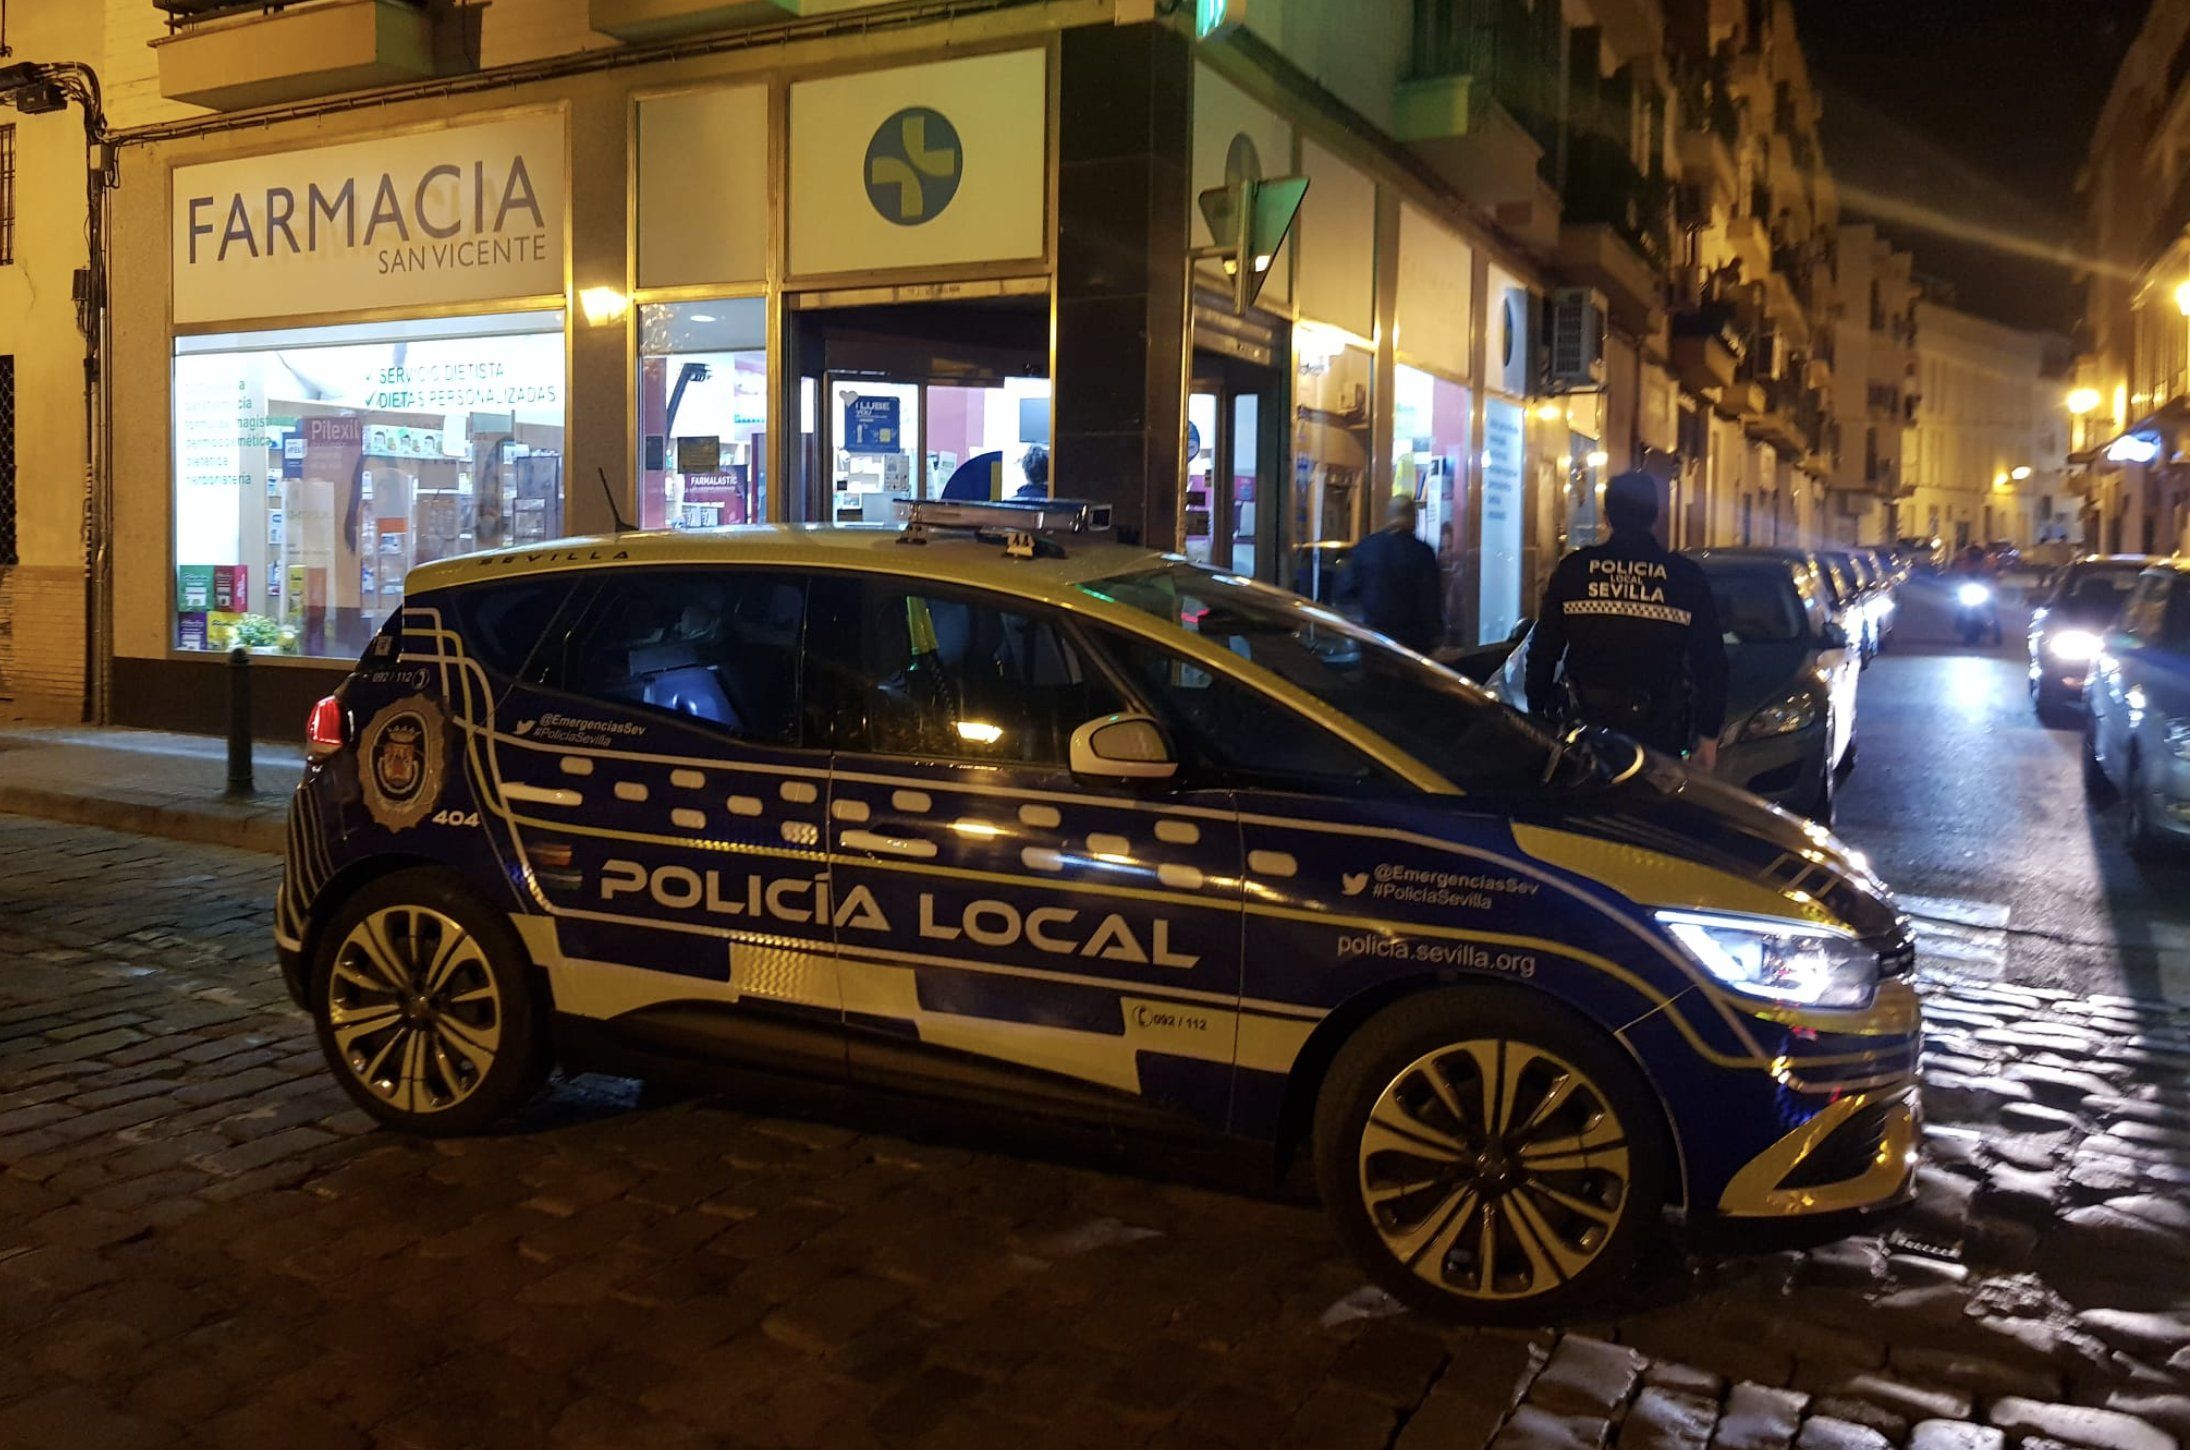 Coche policía local Sevilla atraco farmacia / Emergencias Sevilla